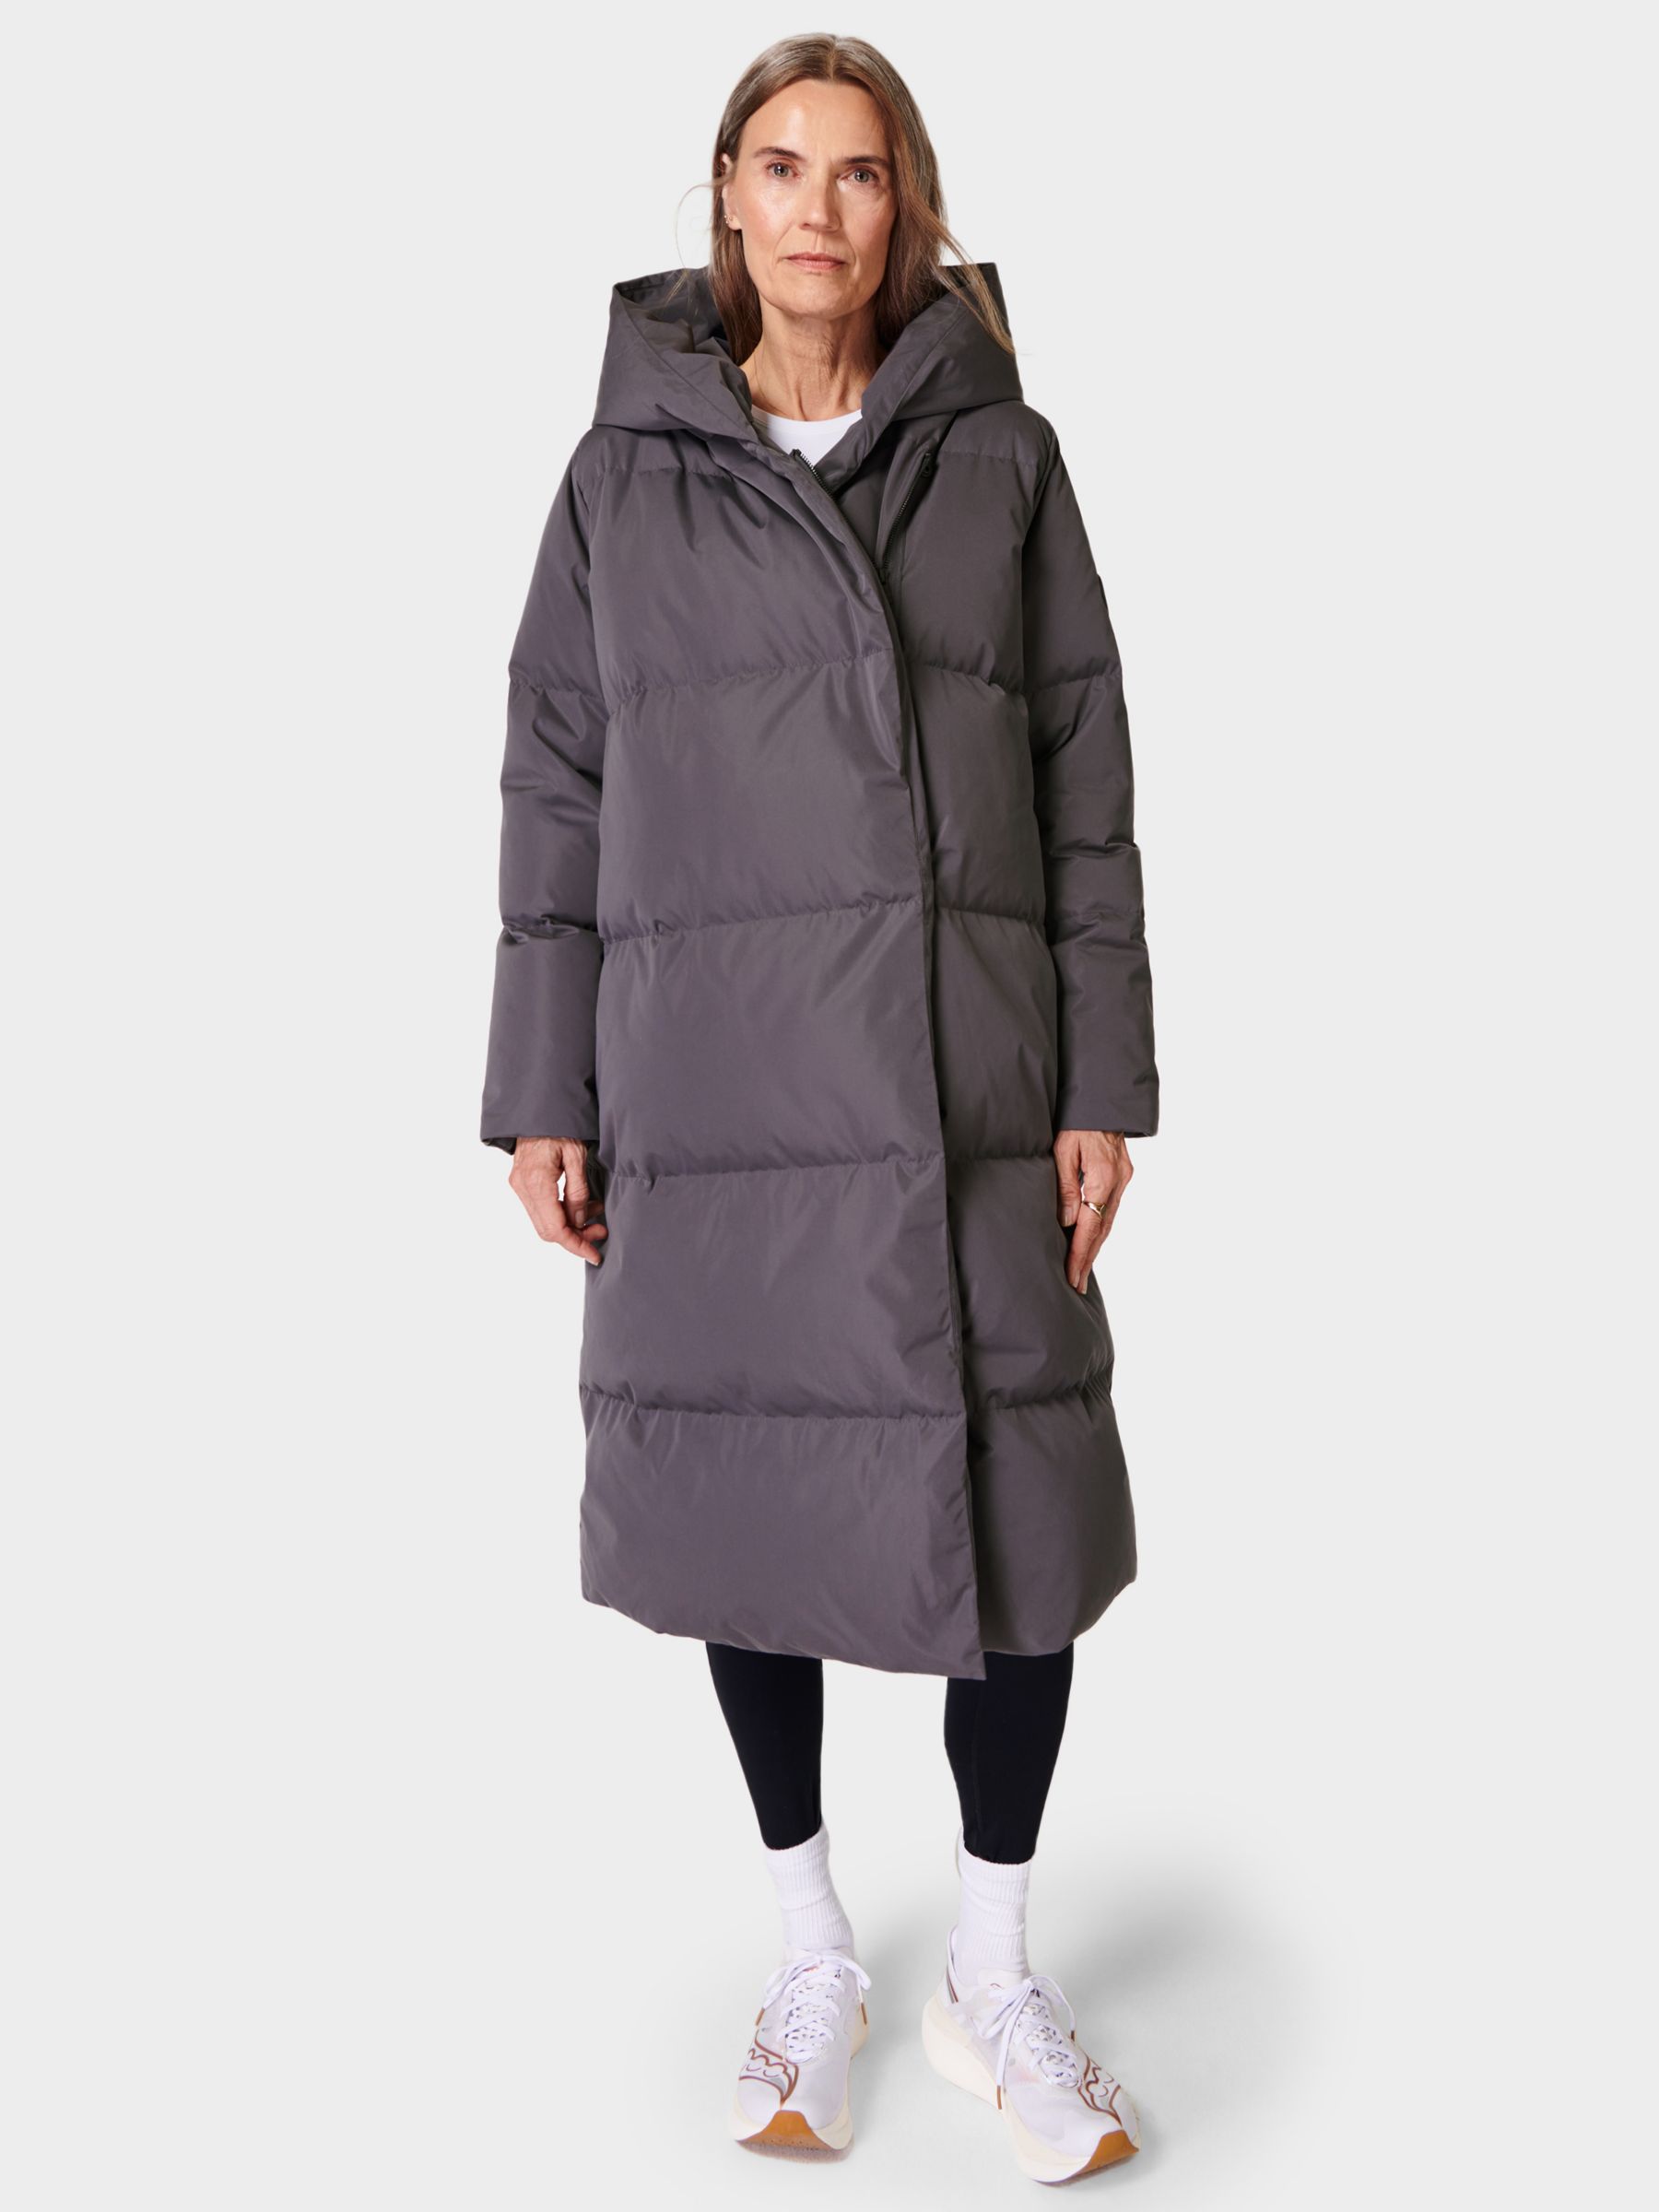 Sweaty Betty Cocoon Longline Padded Coat, Urban Grey, S